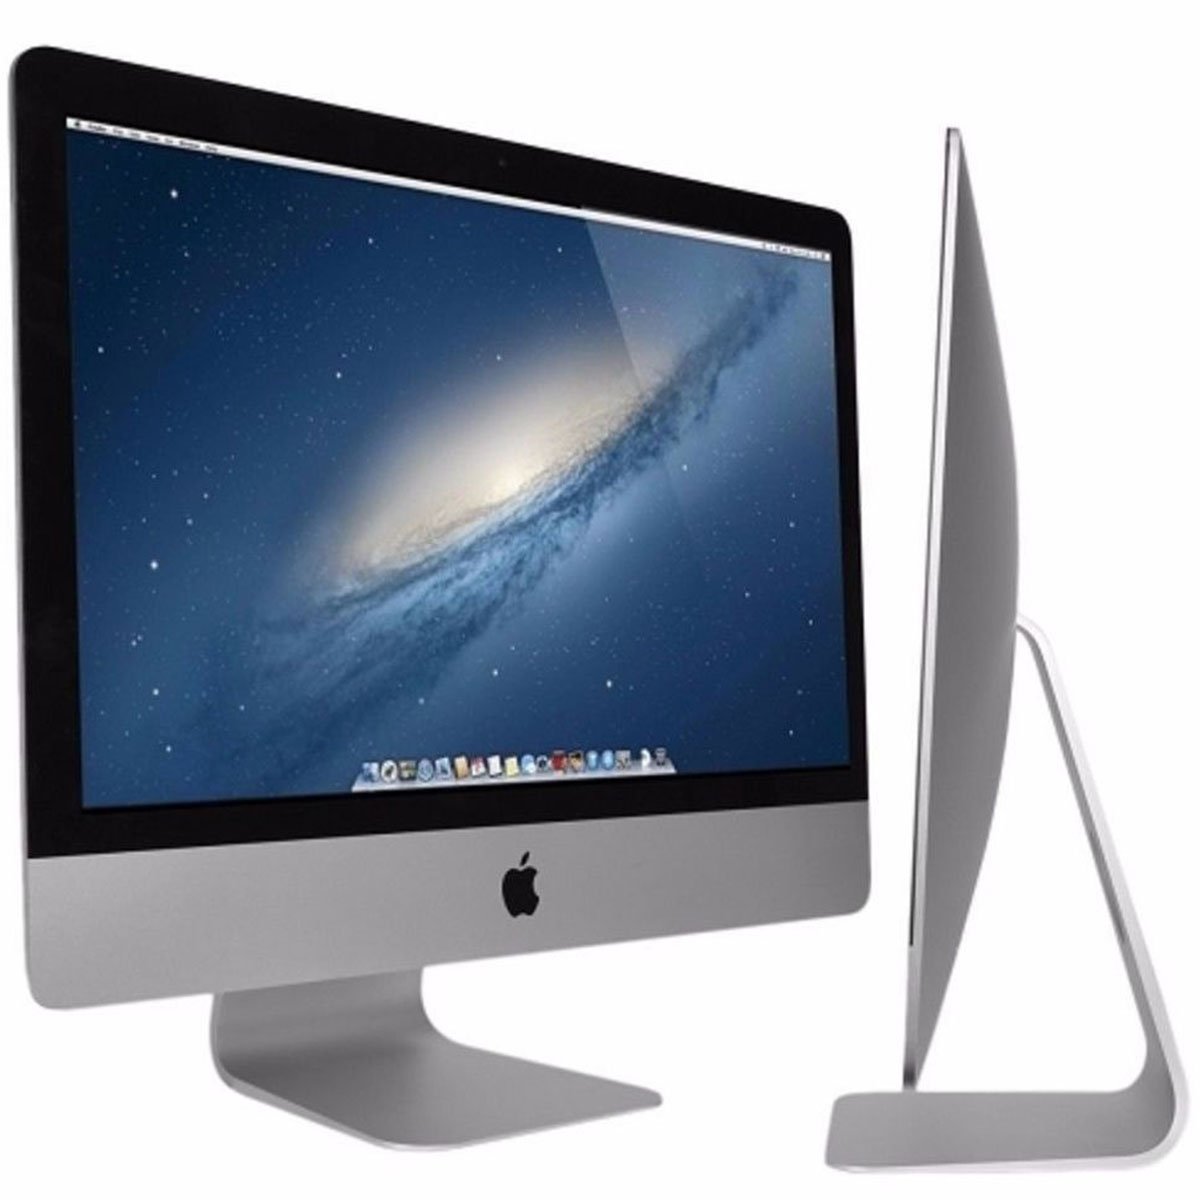 iMac (21.5-inch, Late 2012) A1418 Corei7